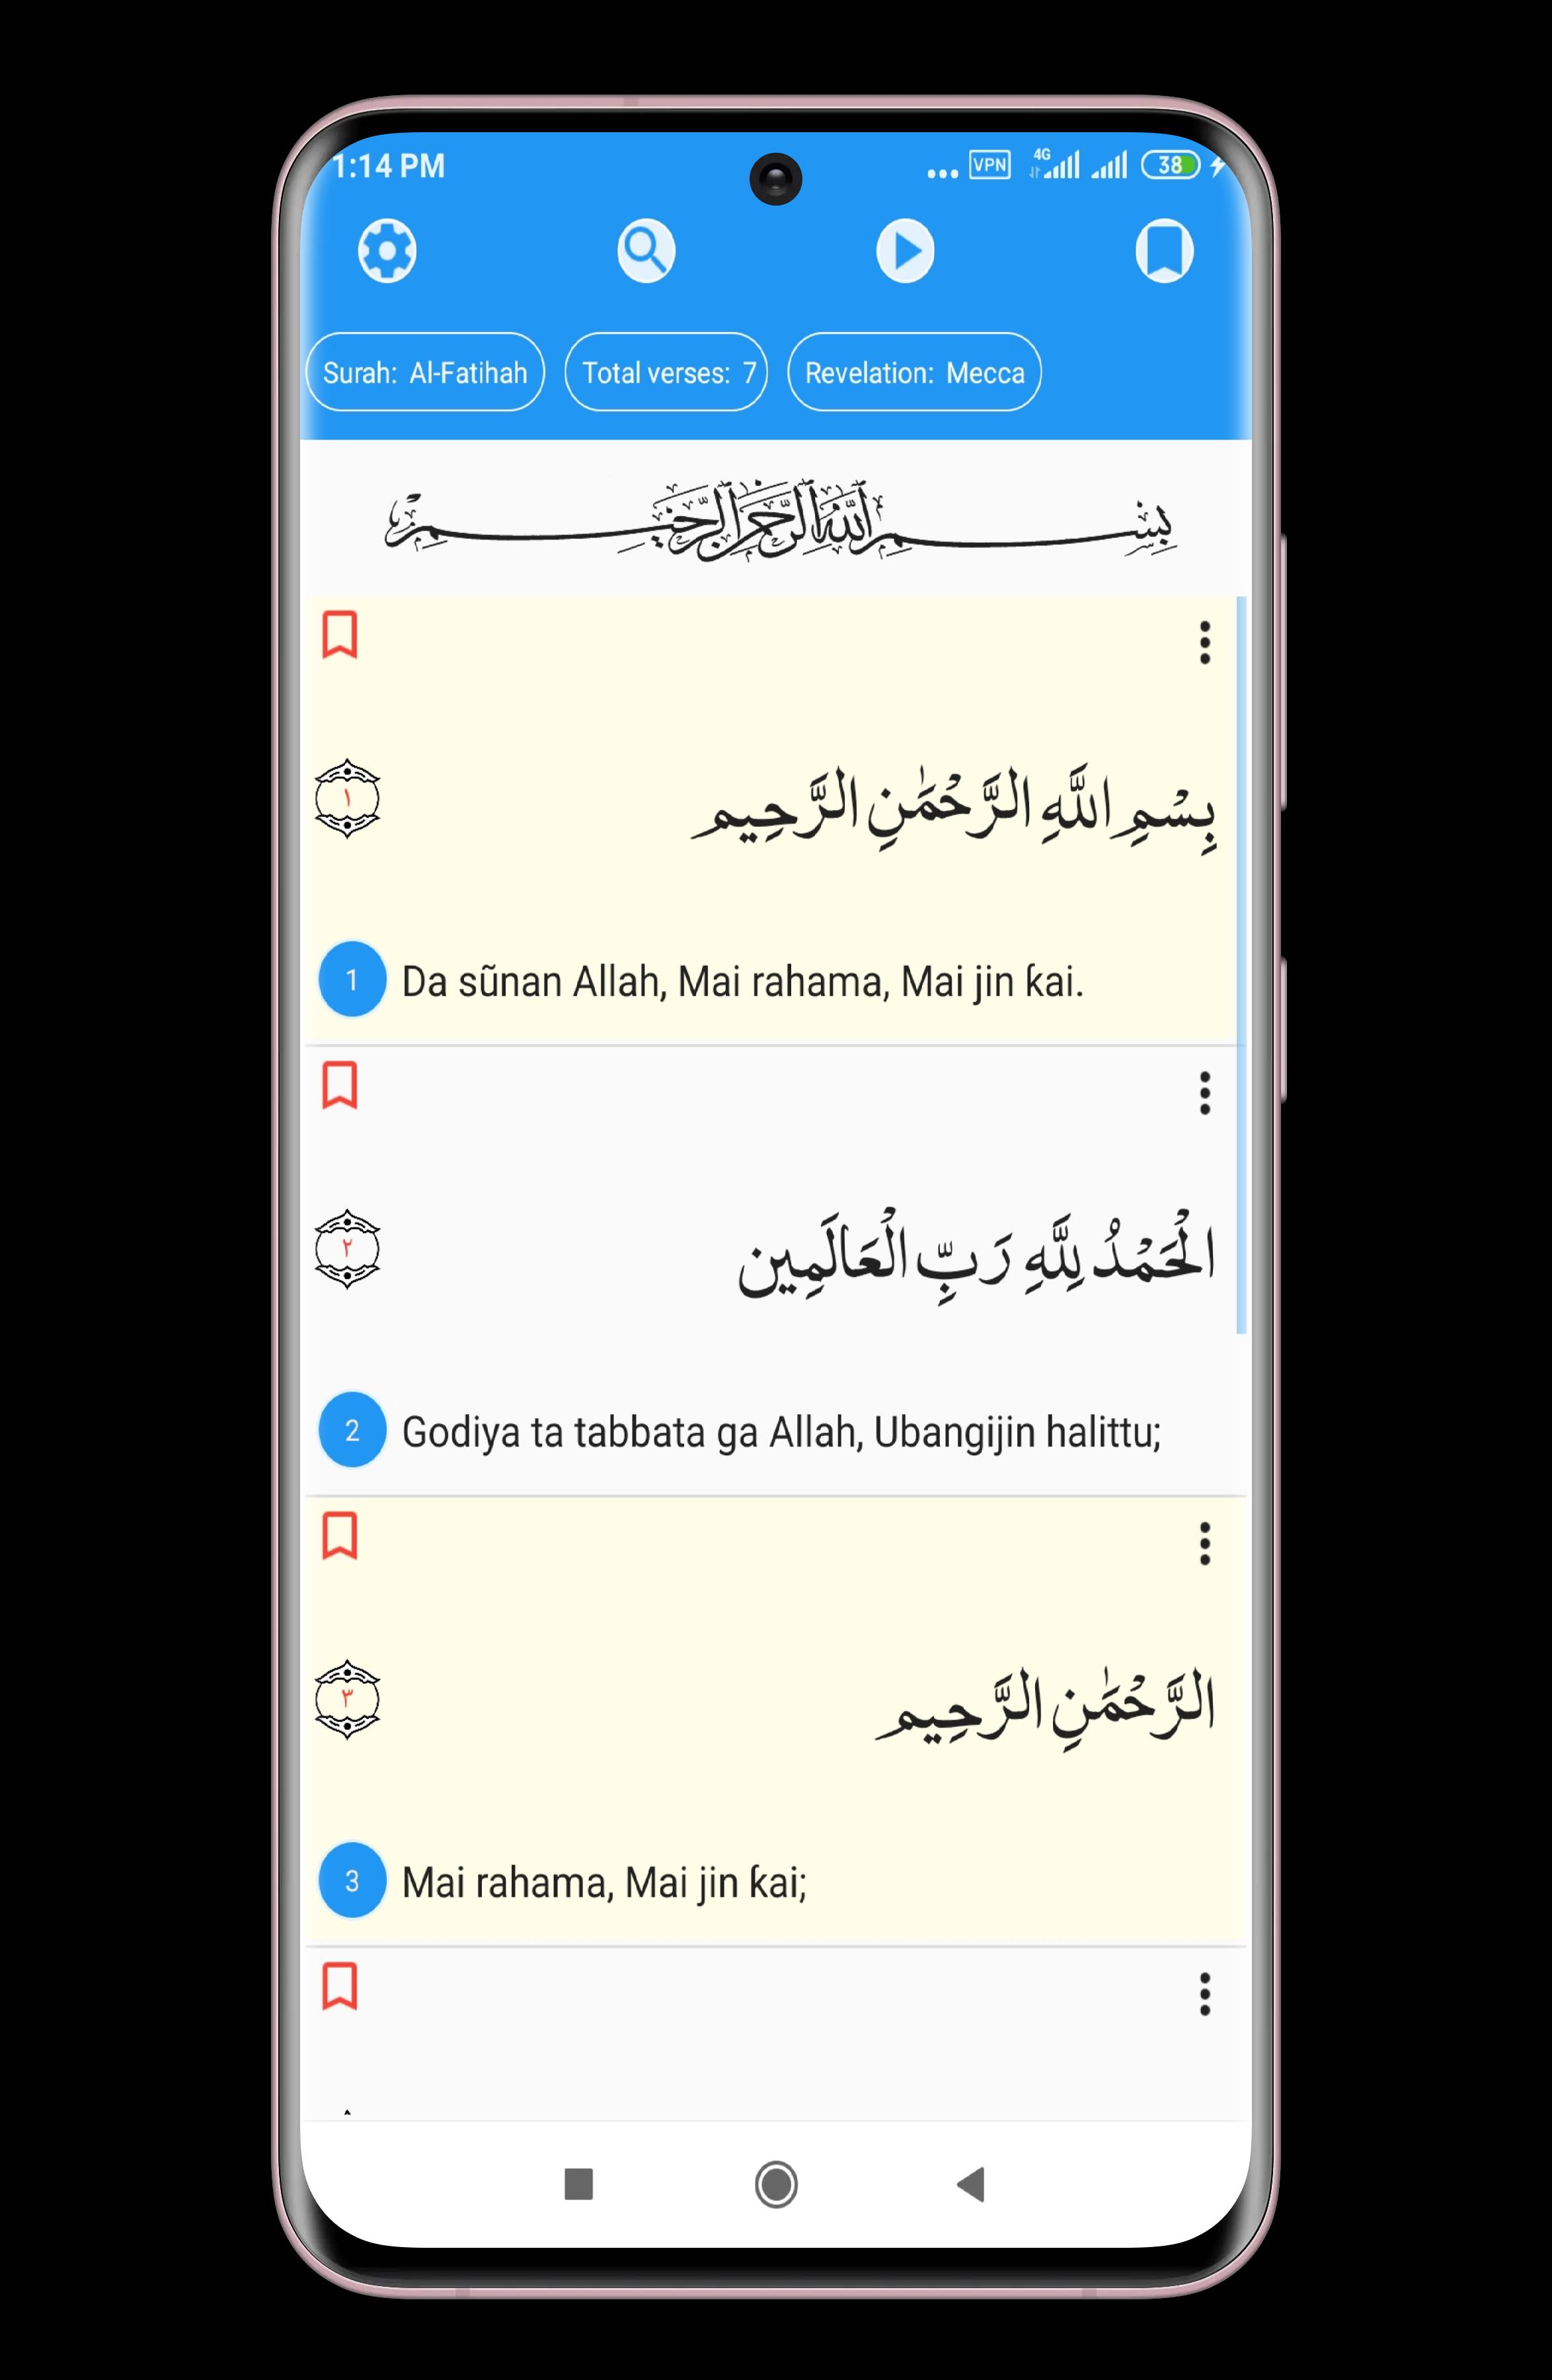 Hausa Qur'an - Qur'an with Hausa Translation 1.1 Screenshot 2